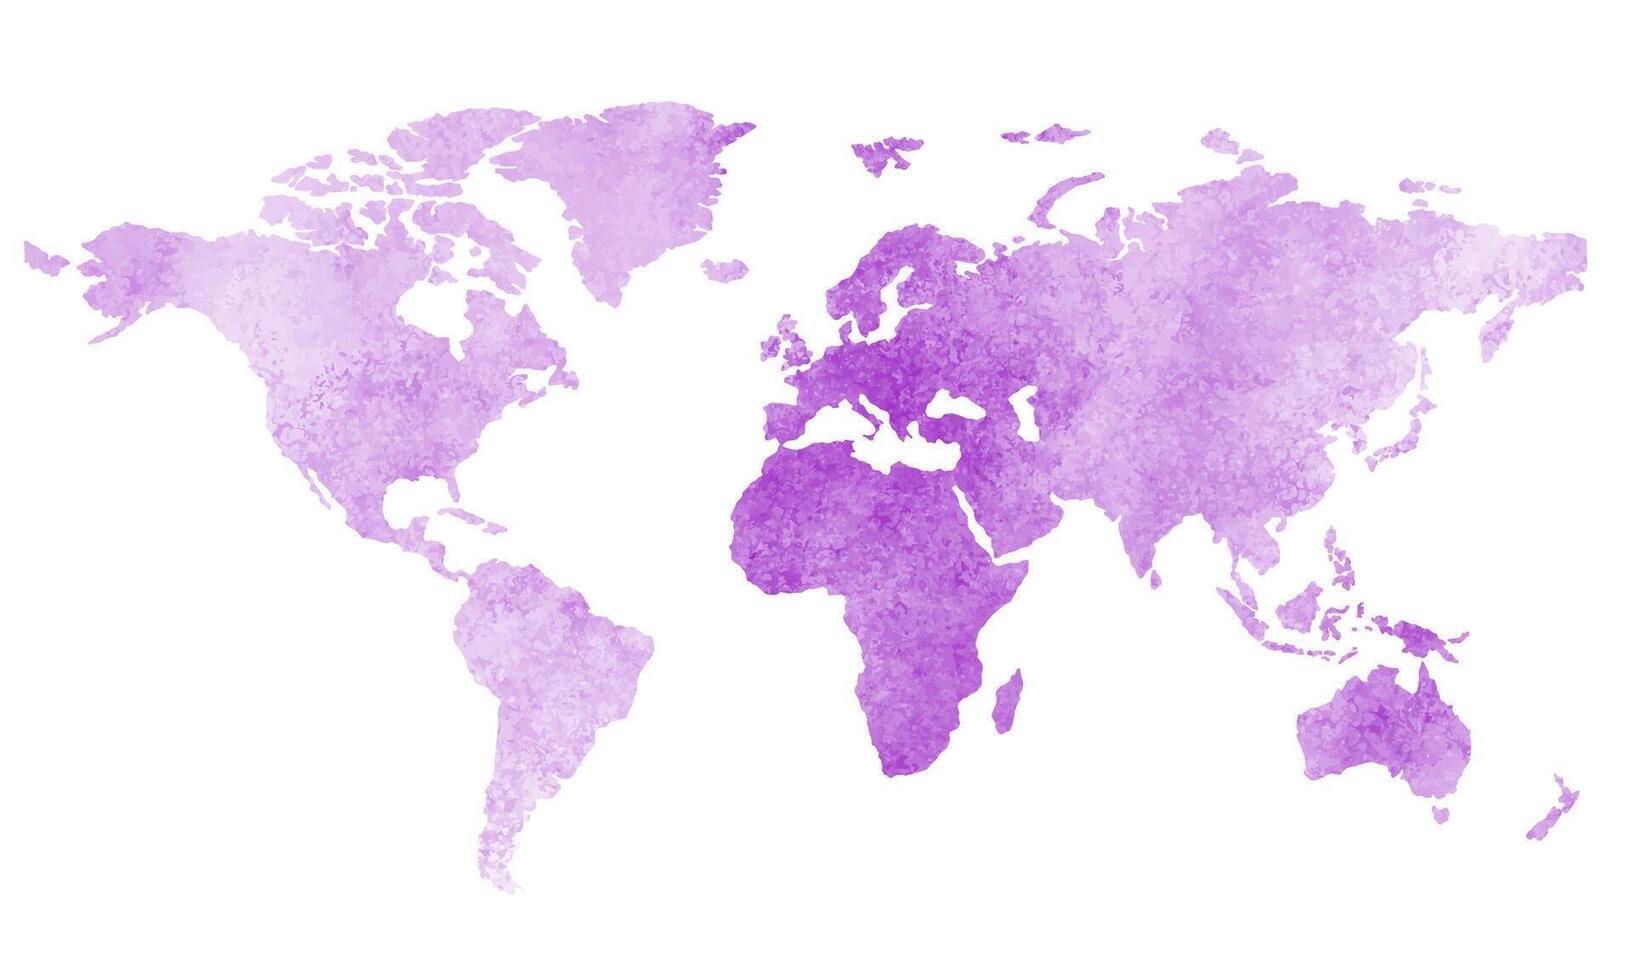 Purper kleur wereld kaart waterverf vector achtergrond